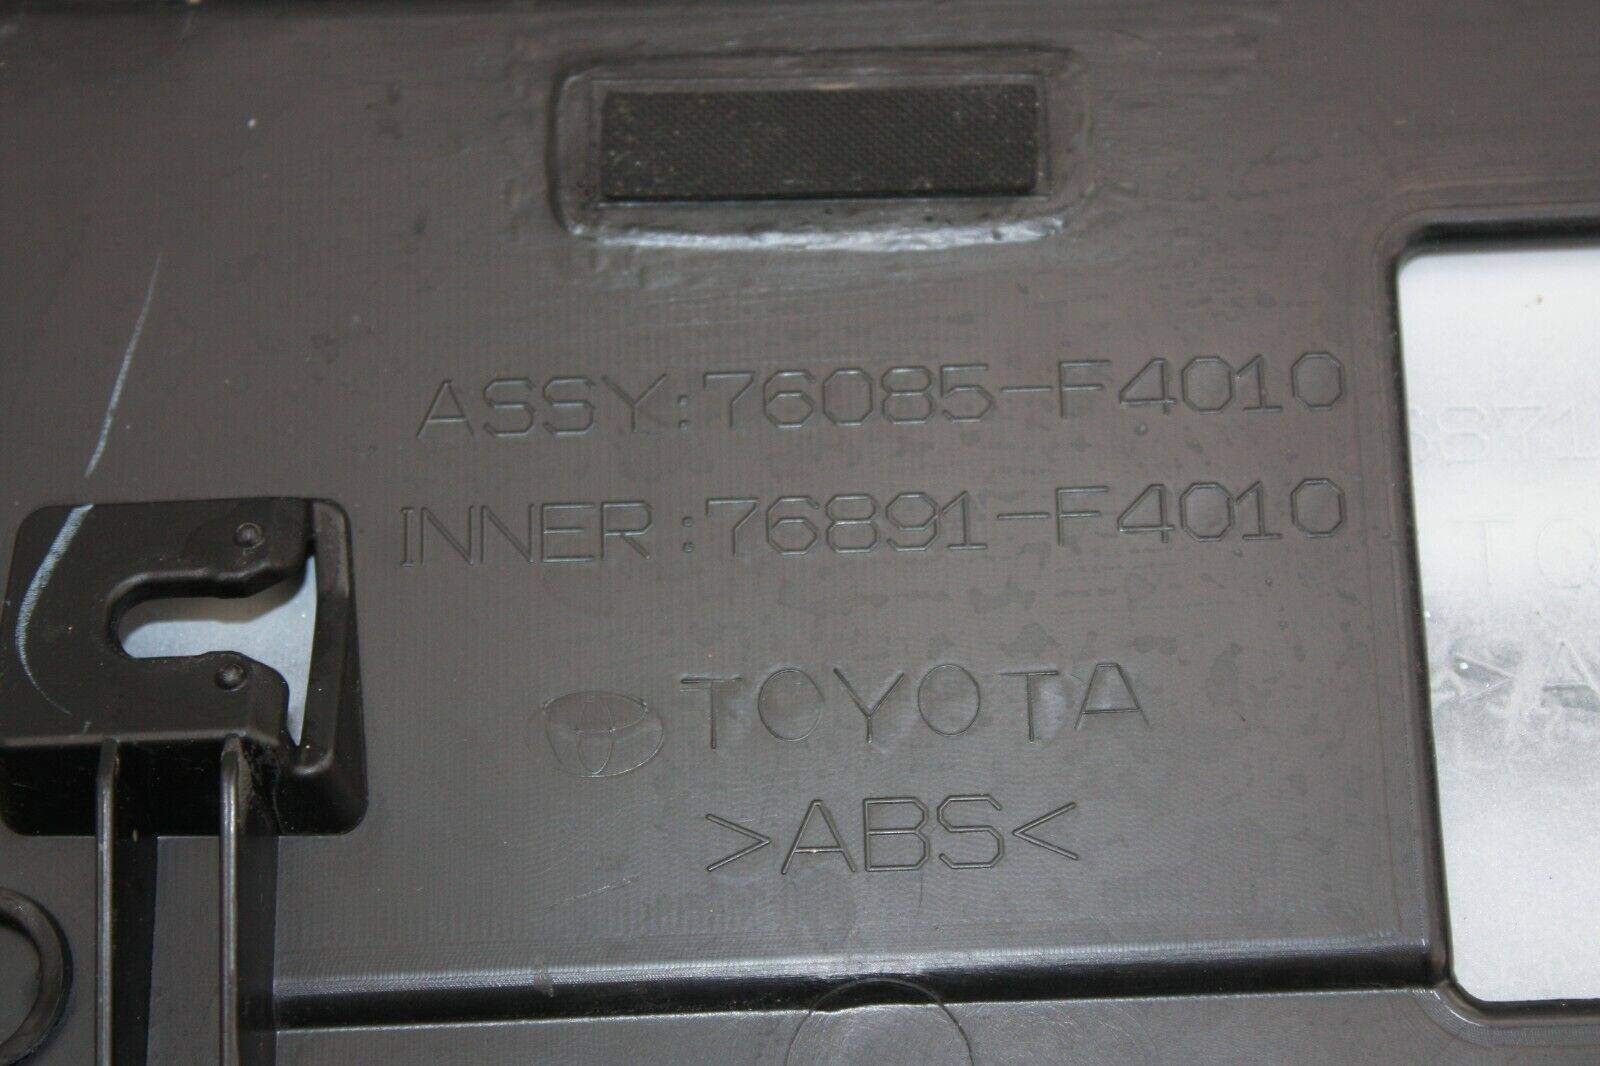 Toyota-C-HR-Rear-Tailgate-Spoiler-76085-F4010-Genuine-175367543635-6